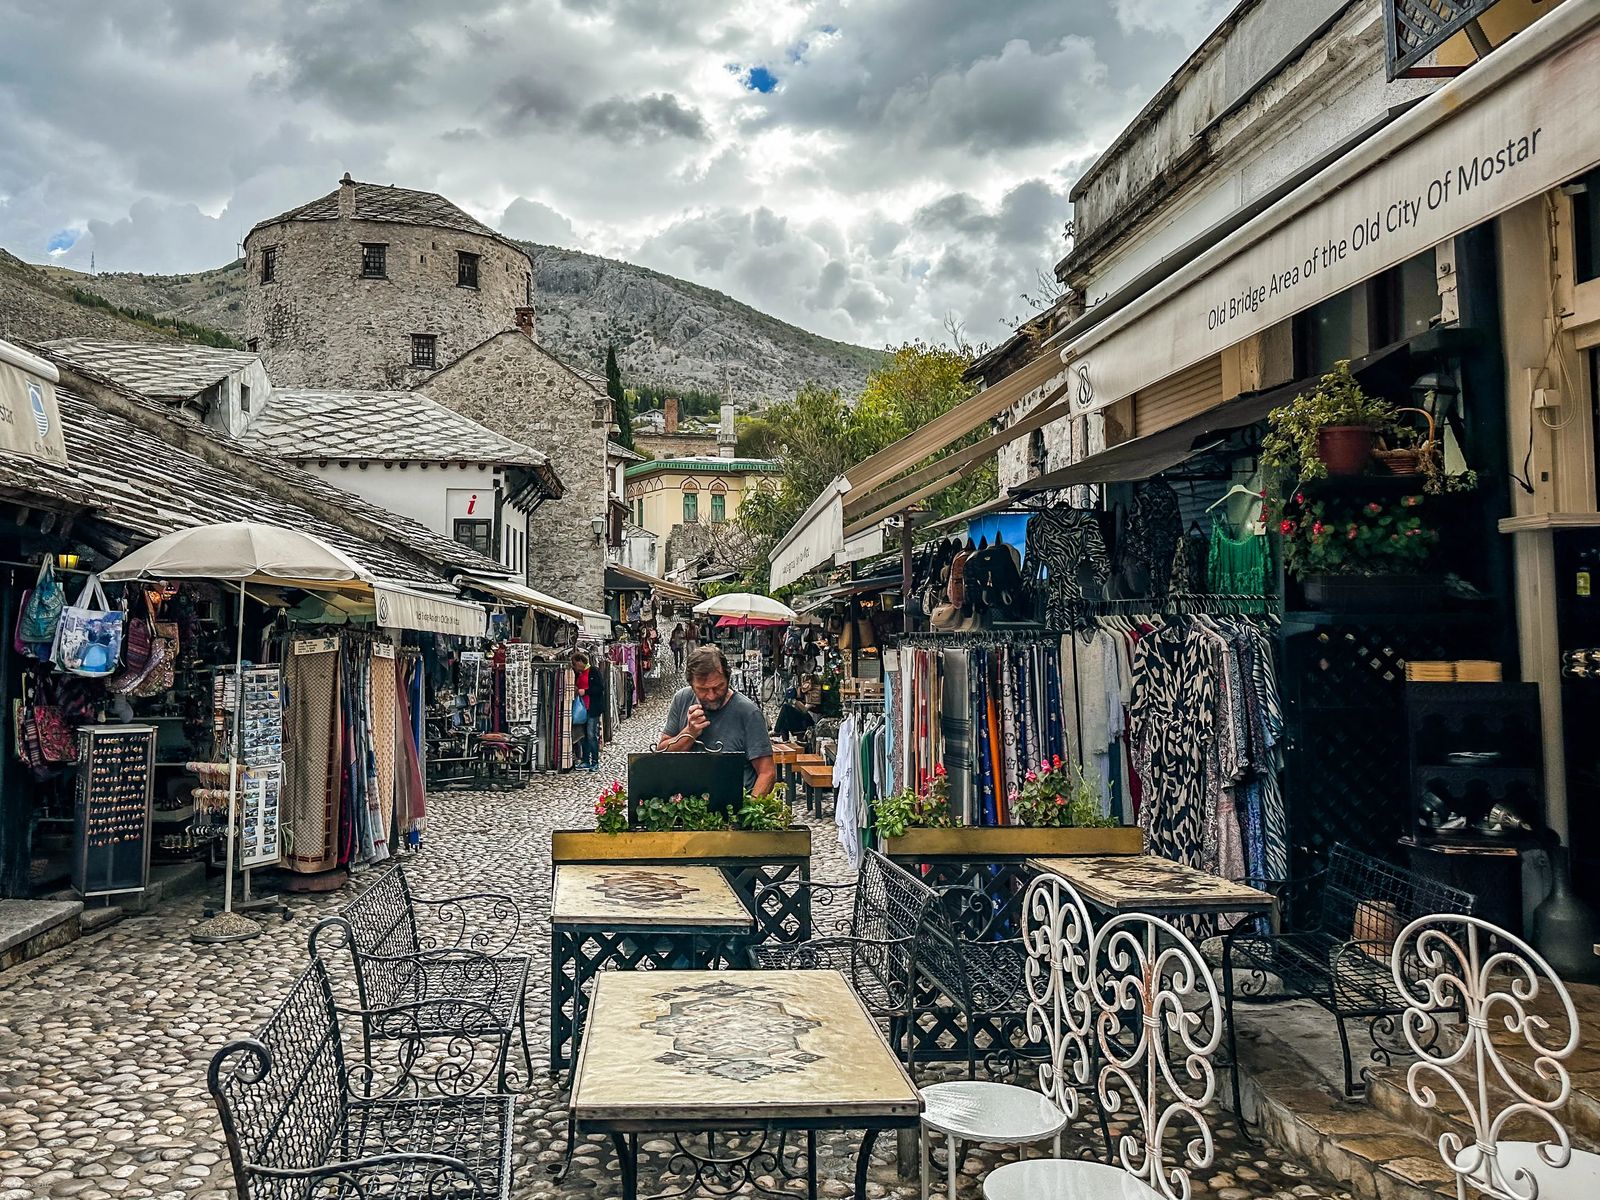 One Day In Mostar Bosnia - Old Bazaar